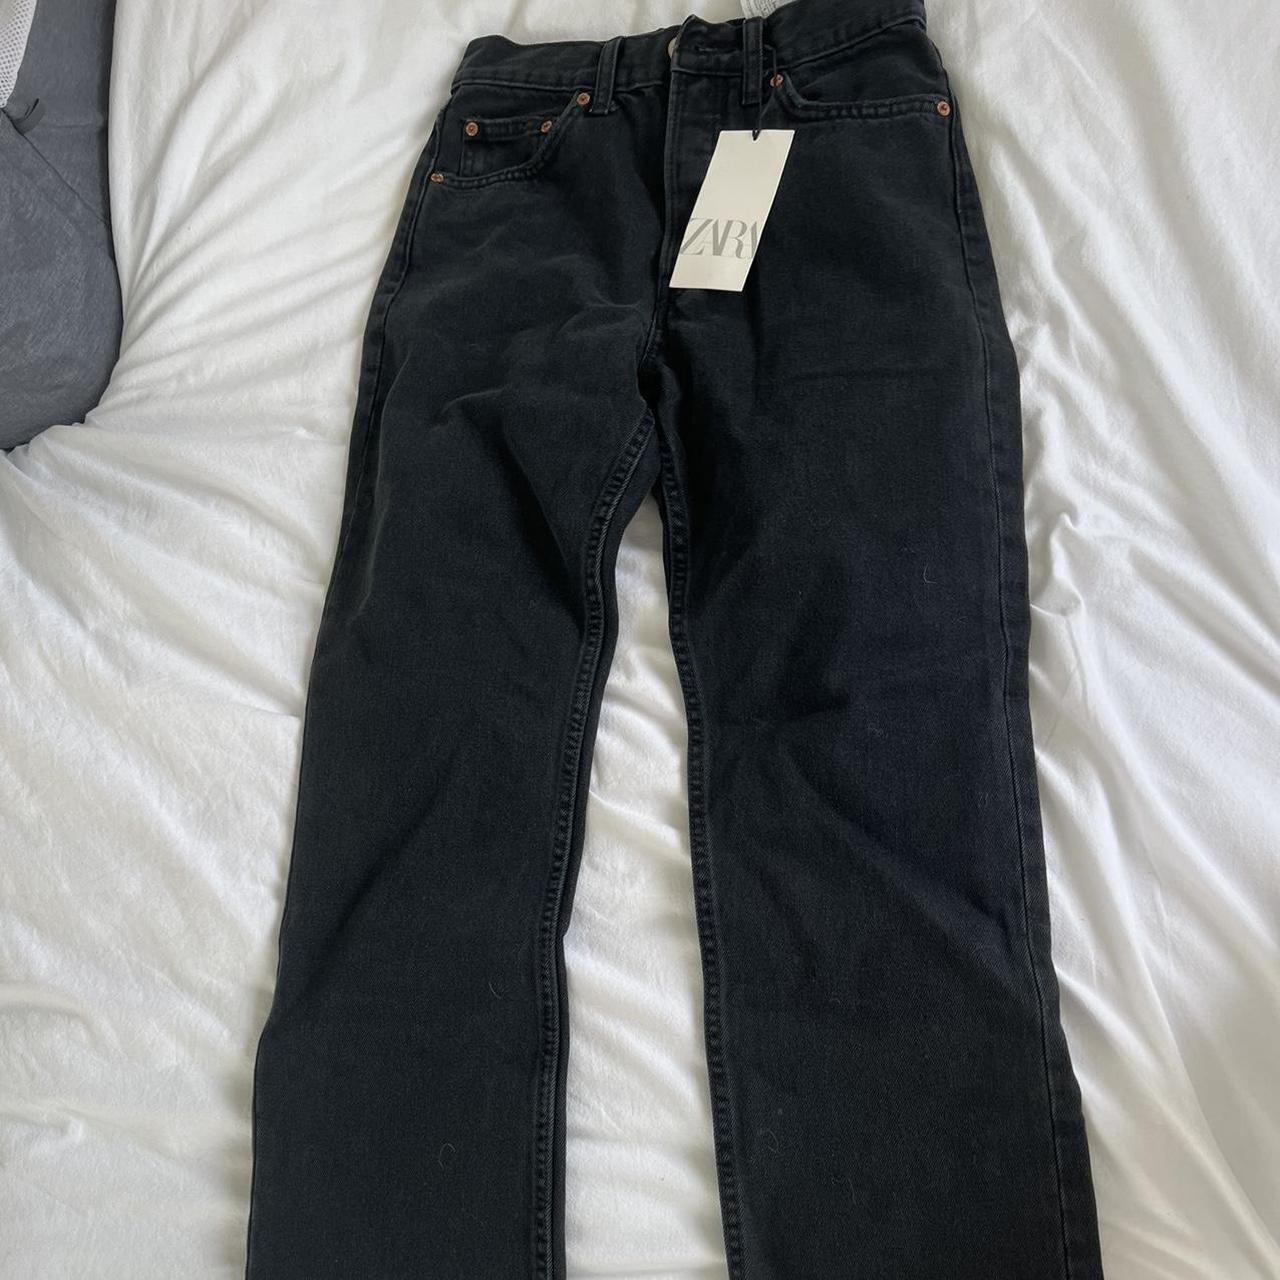 Zara jeans size 4 never worn - Depop